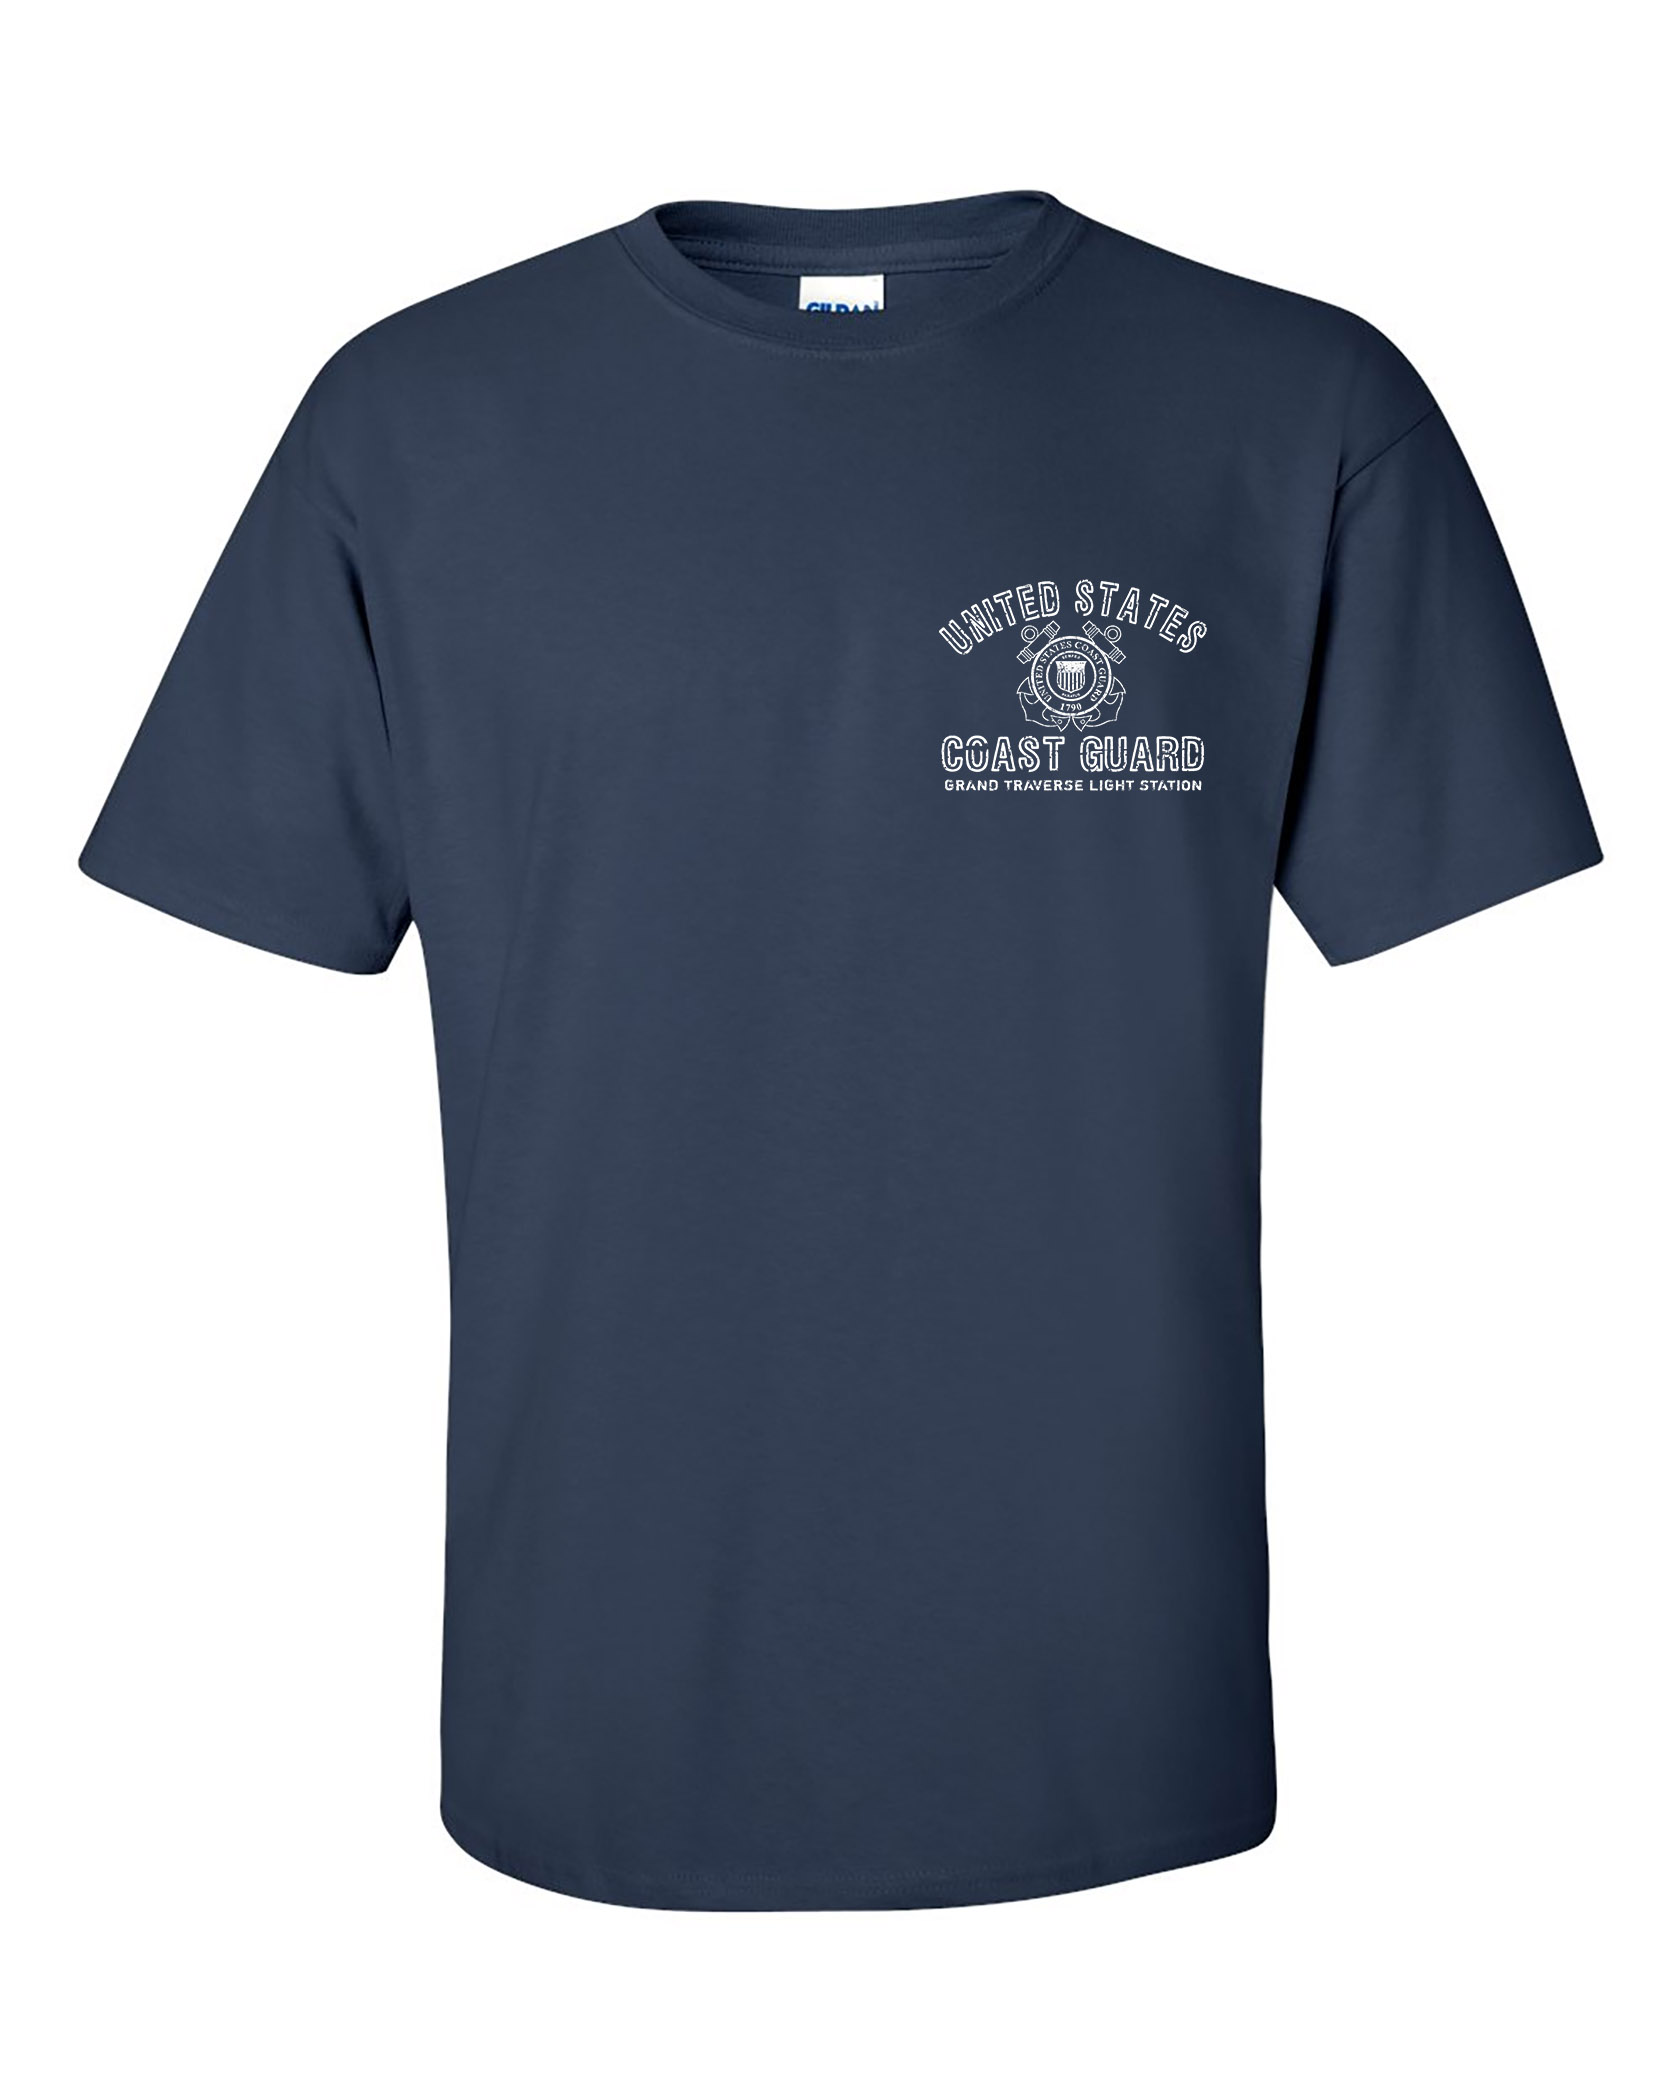 USCG Grand Traverse Light Station T-Shirt - Grand Traverse Lighthouse